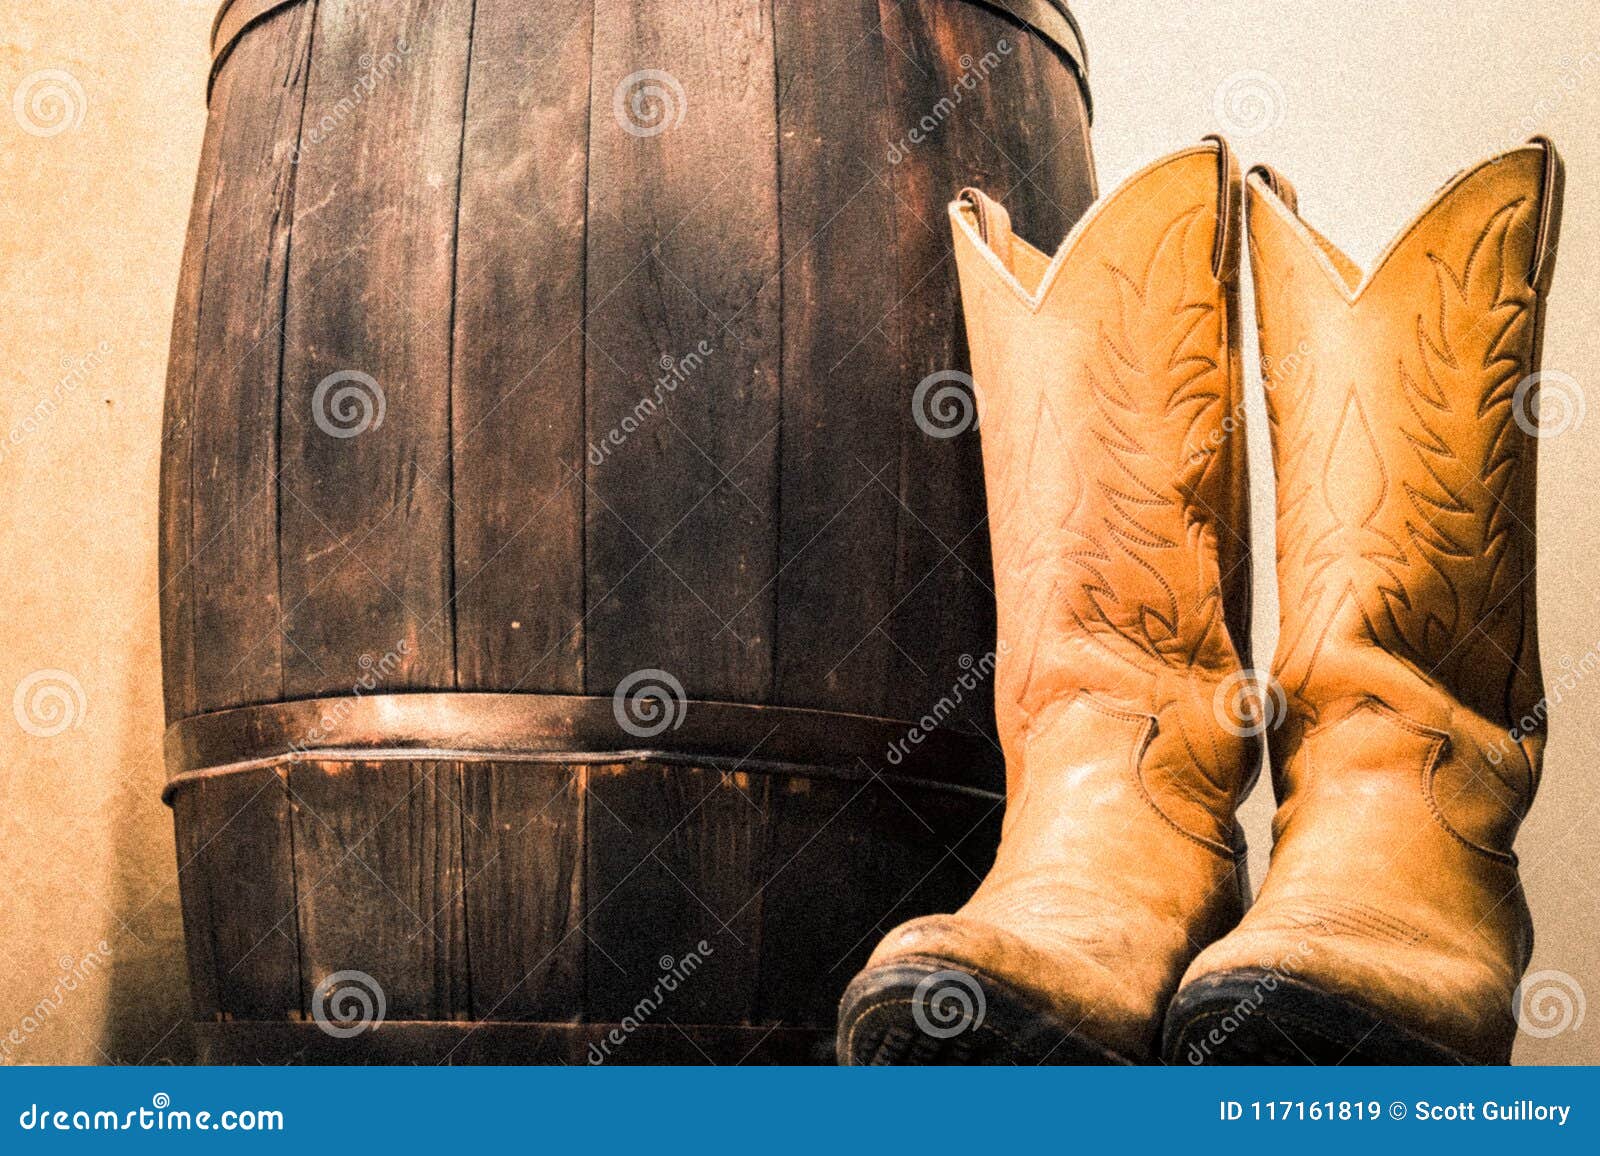 next cowboy boots